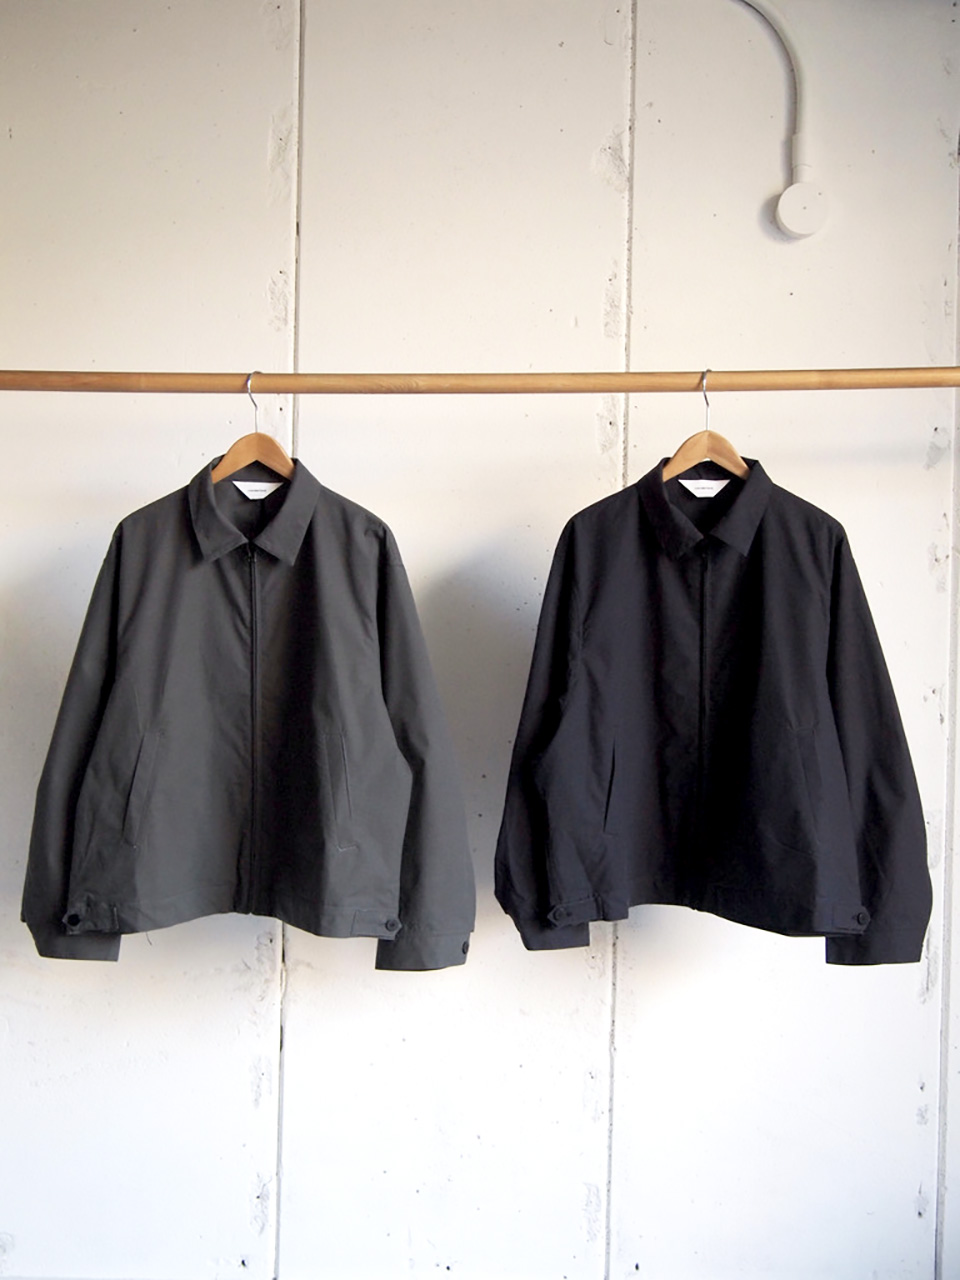 wonderland  Hanging jacket/pants  BLK1ldk